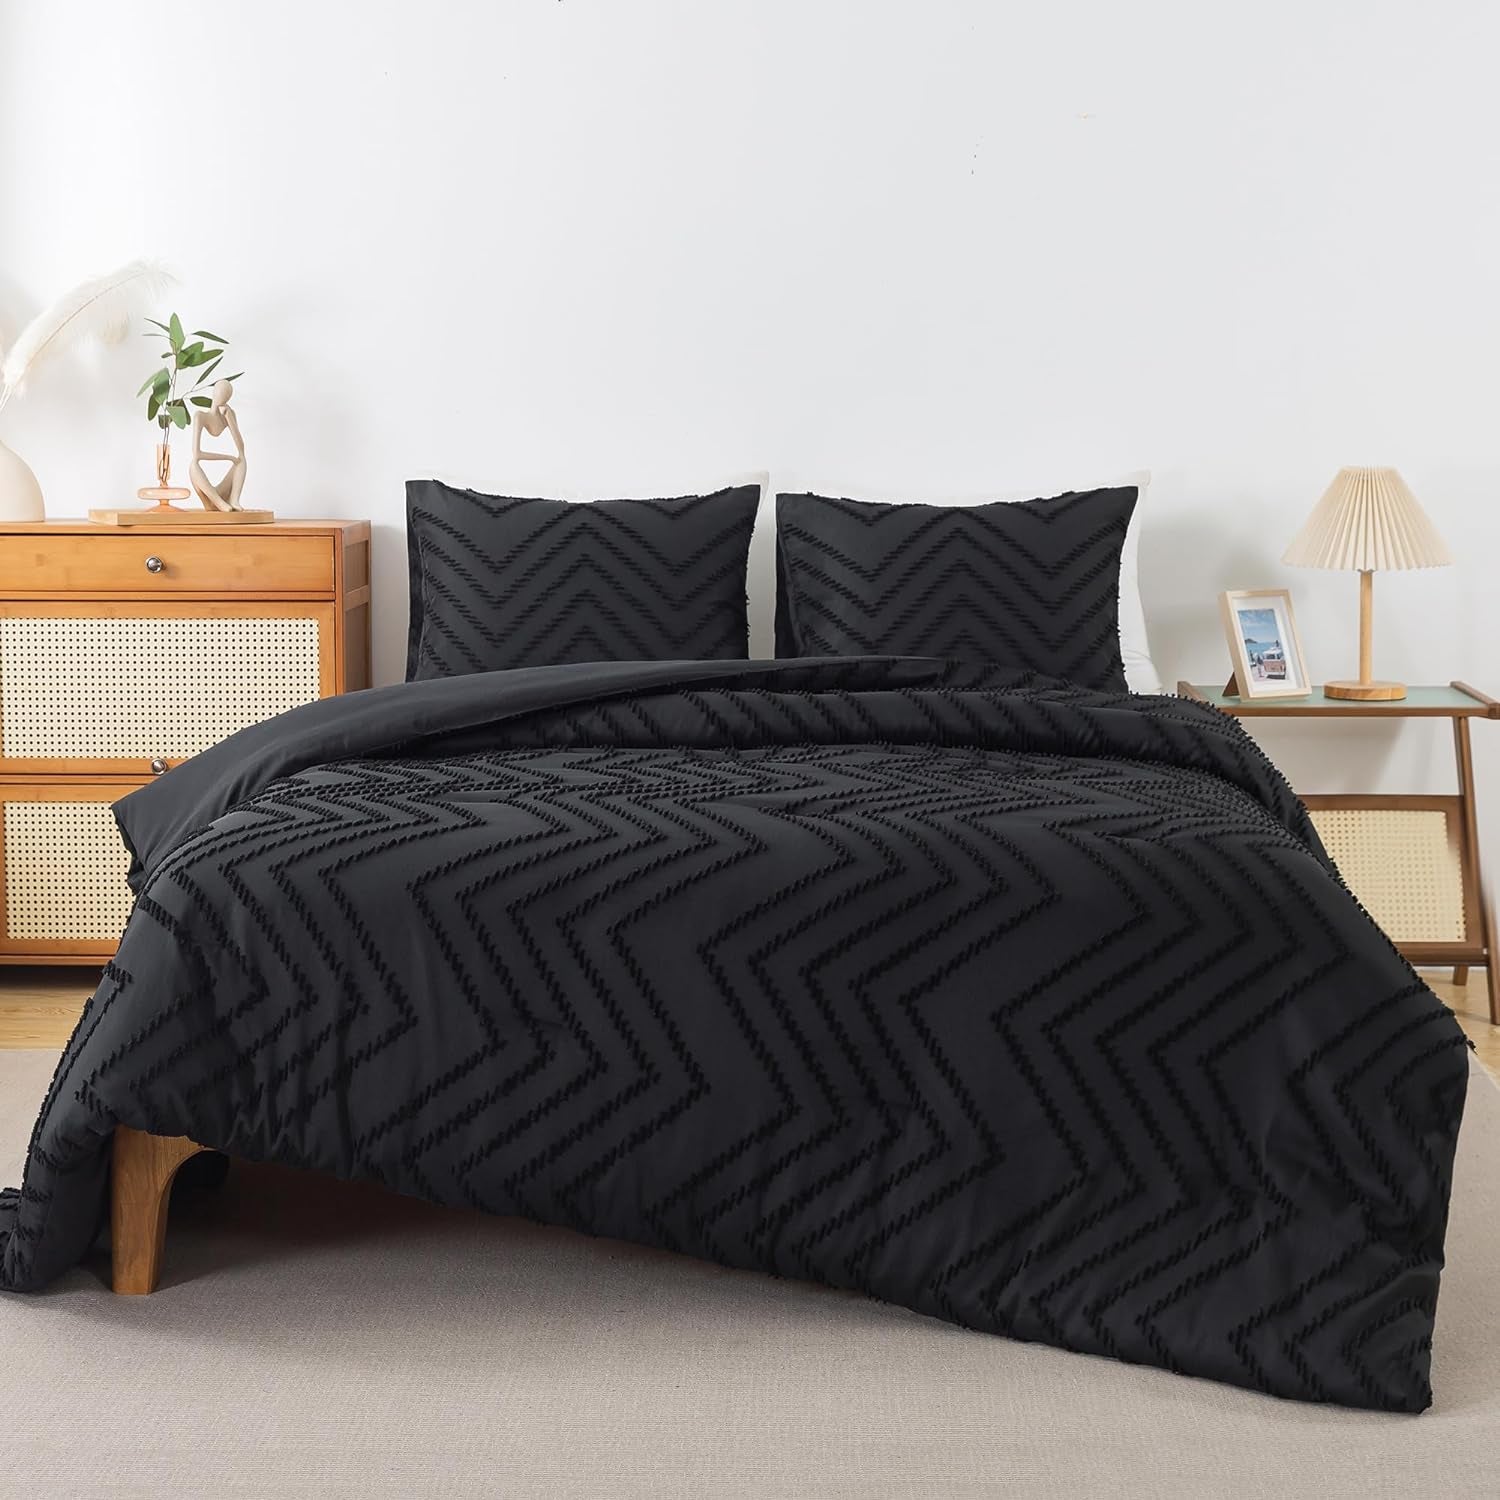 Black Comforter Full Size, Boho Soft Fluffy Warm Lightweight Bedding Comforter Sets for Full Bed, 3 Pieces Chevron Tufted Aesthetic Microfiber Lightweight Comforter Set